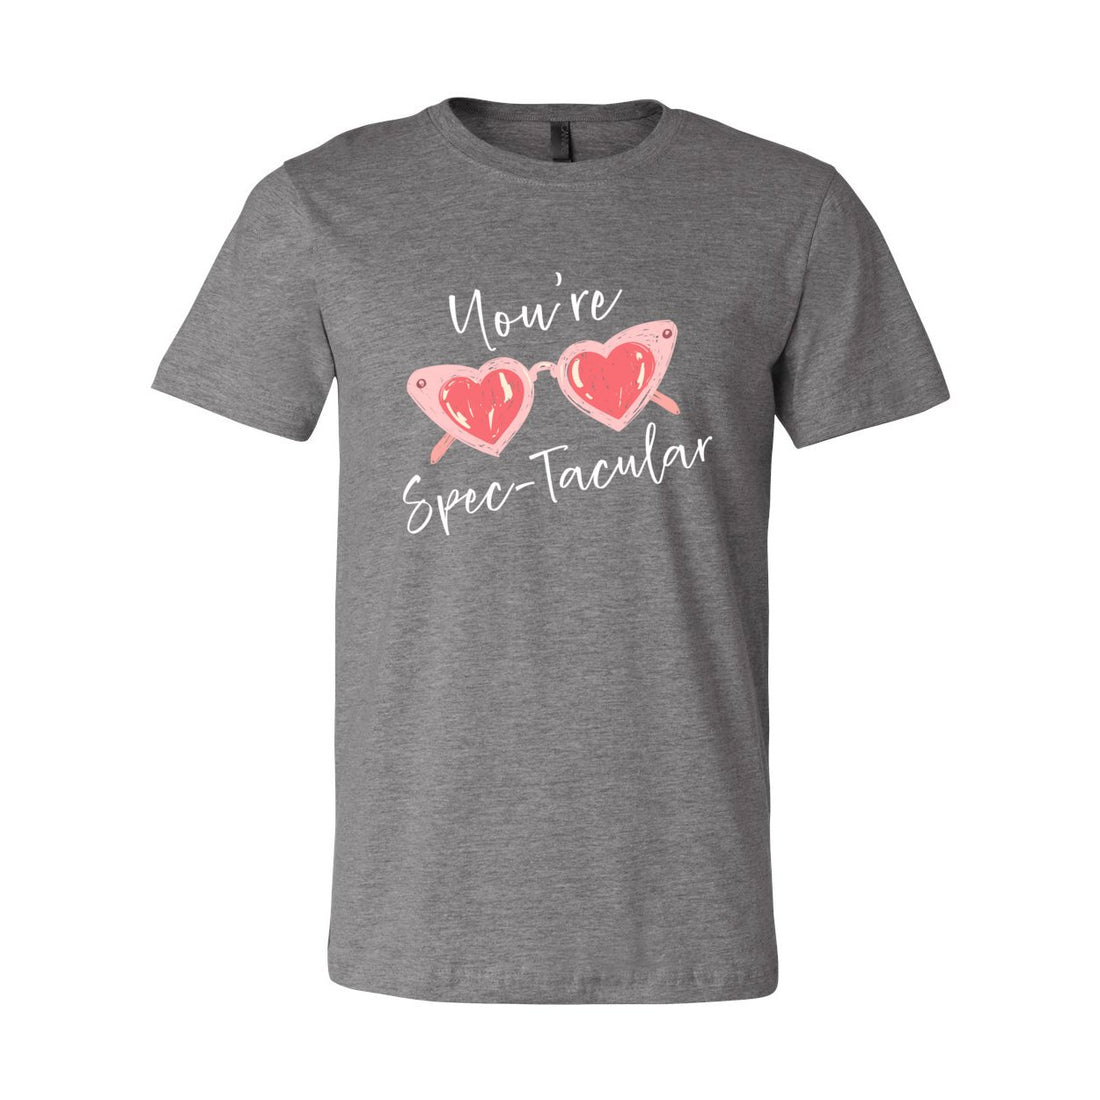 Spec-Tacular Valentine Jersey Tee - T-Shirts - Positively Sassy - Spec-Tacular Valentine Jersey Tee